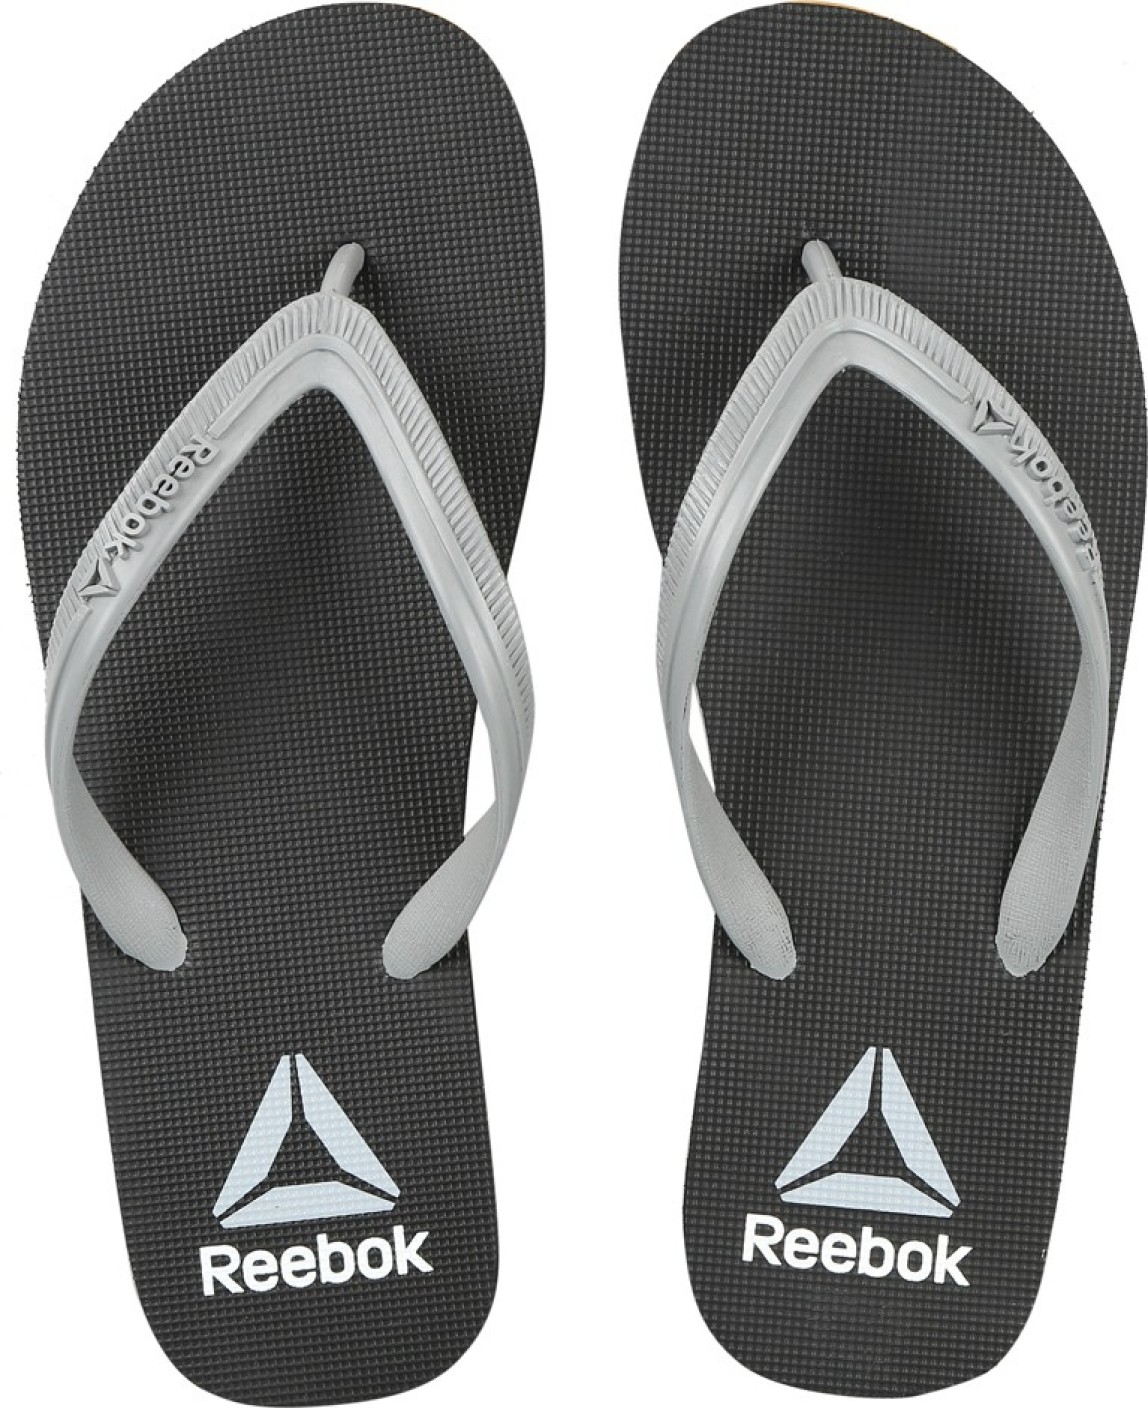 Reebok AVENGER FLIP Slippers - Buy BLACK/GREY/METSIL/WHT Color Reebok ...